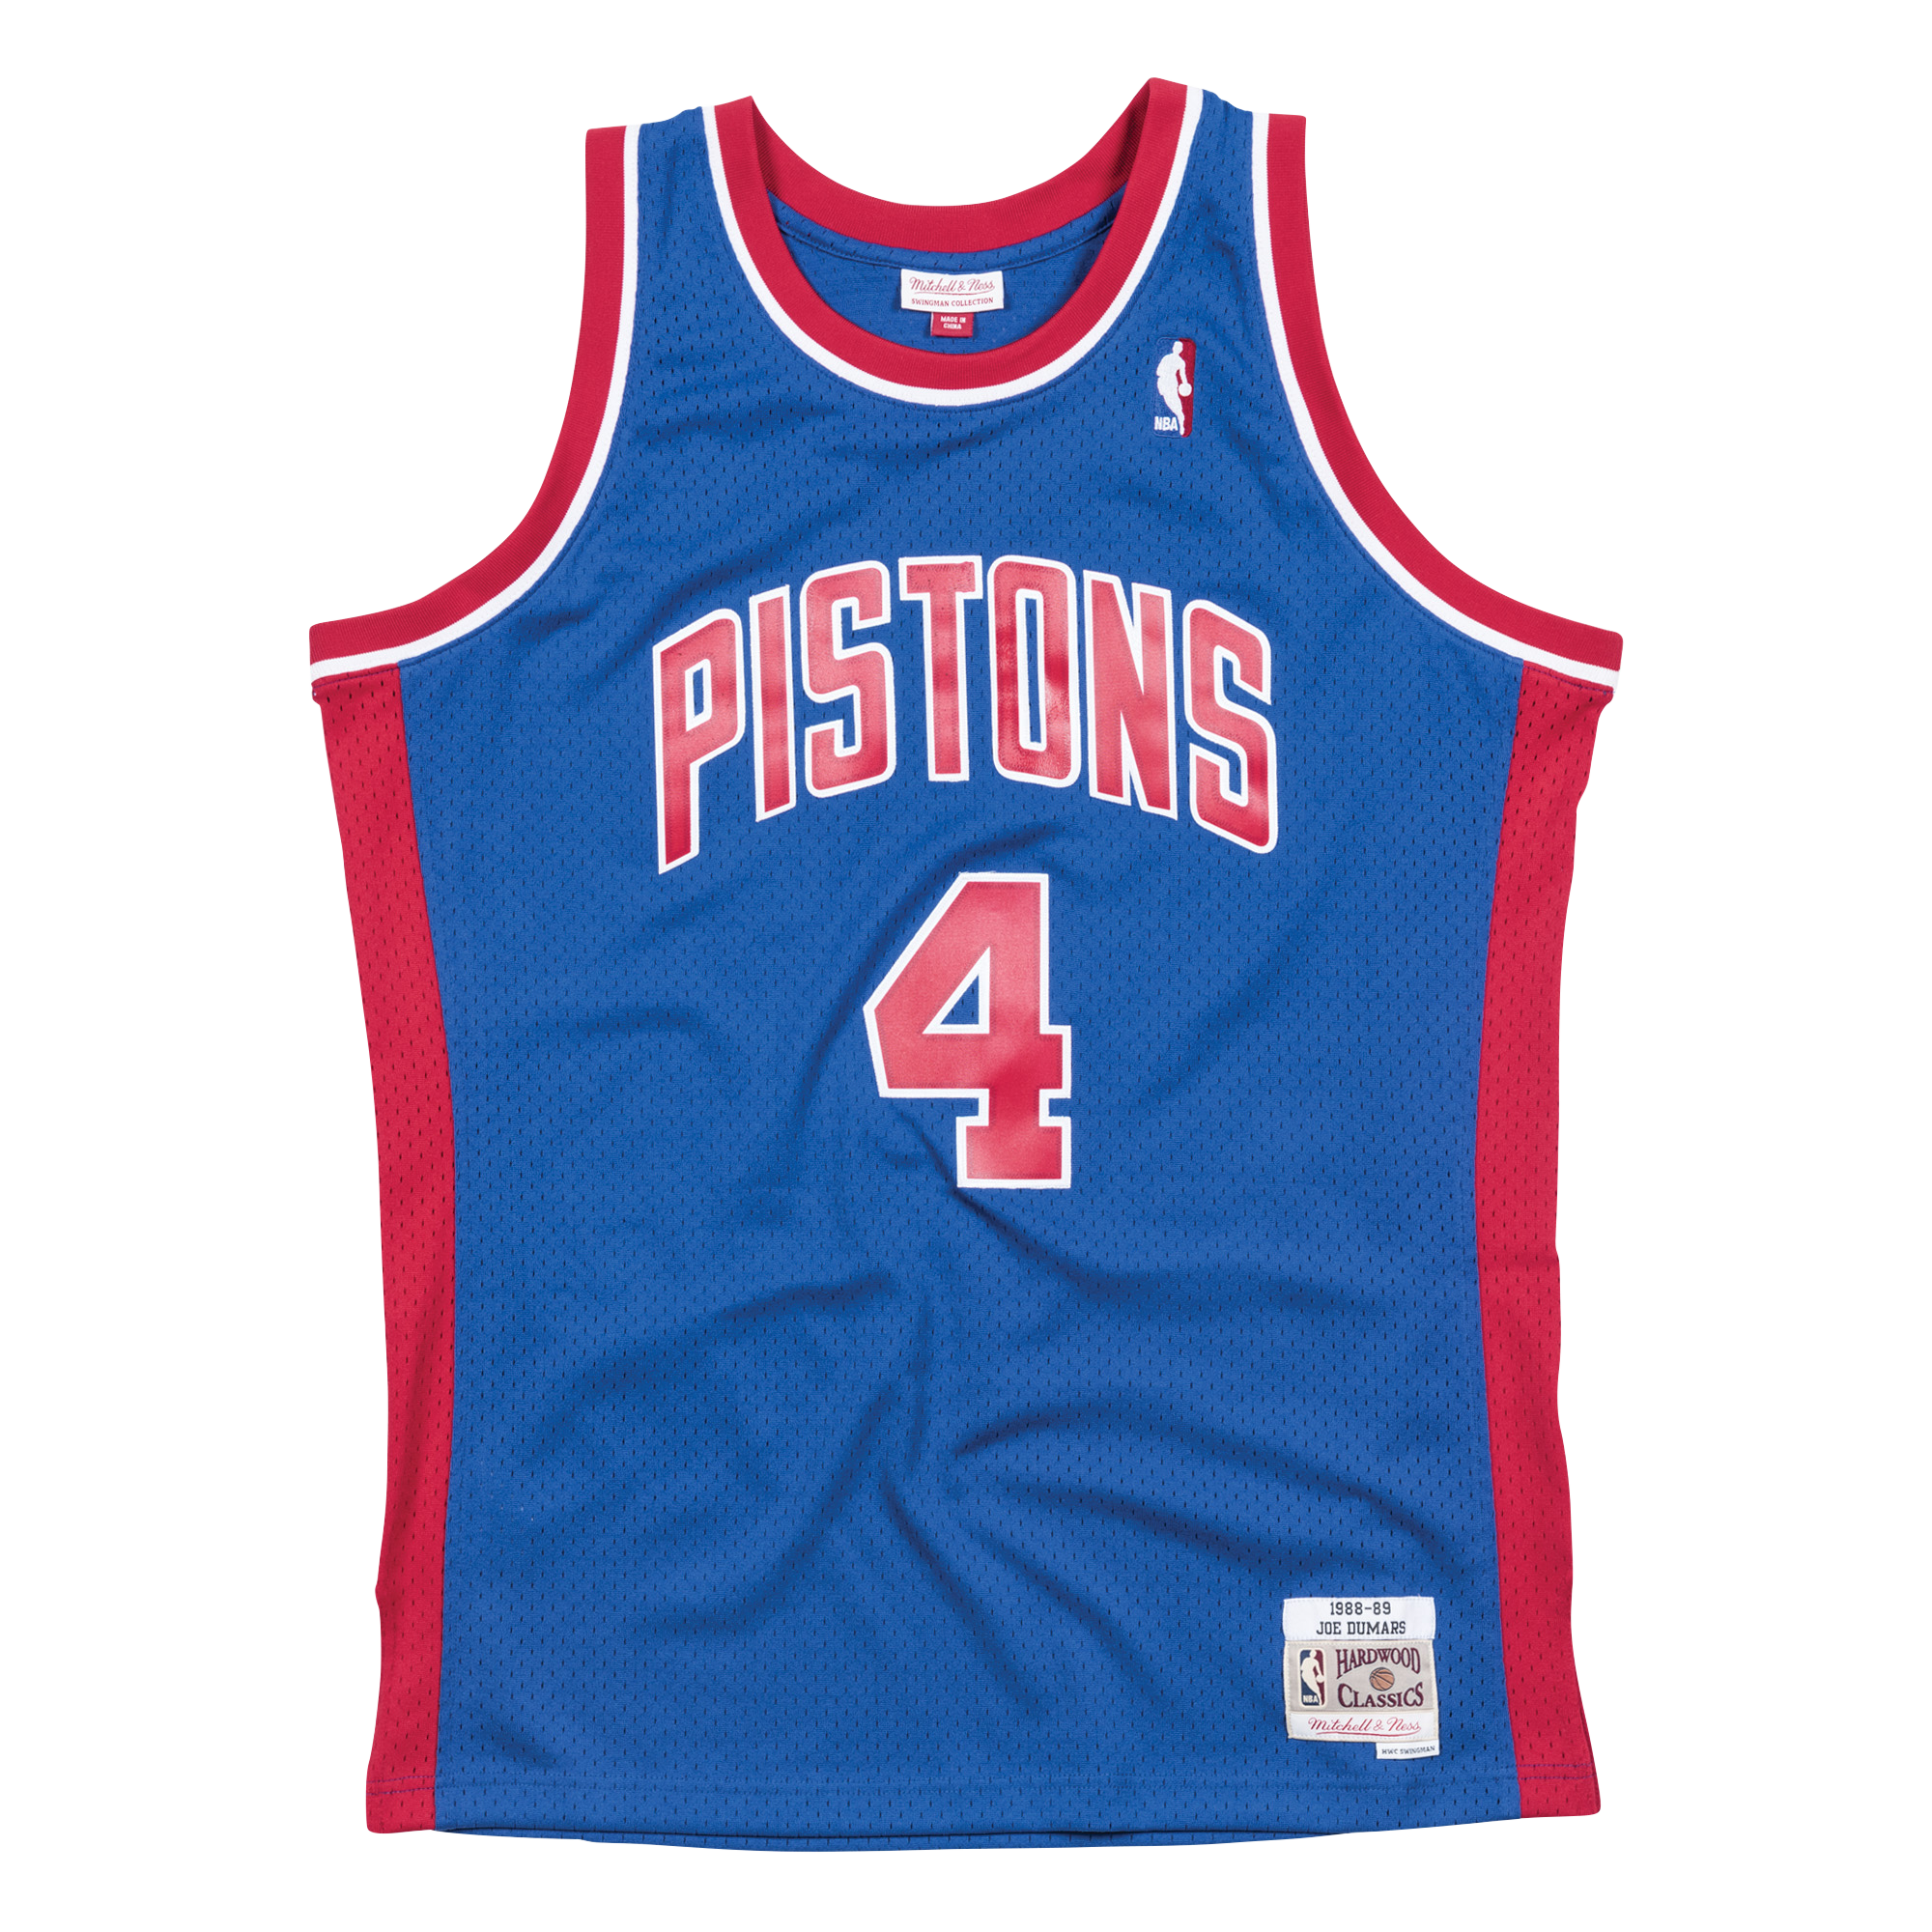 Detroit Pistons PNG HD Quality